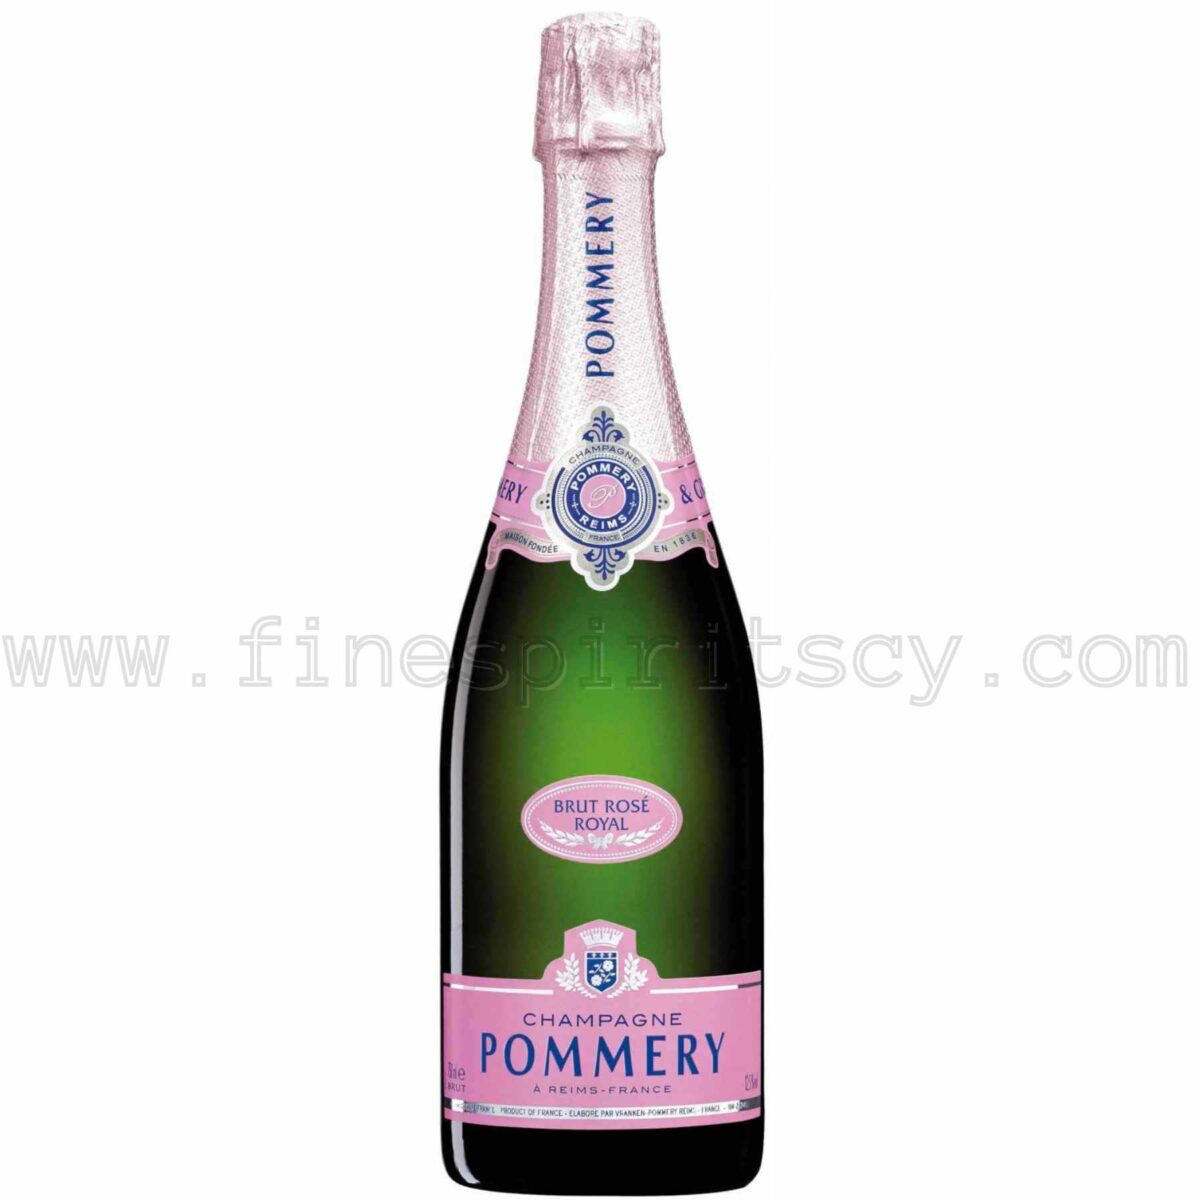 Pommery Brut Rose Royal Champagne Cuvee